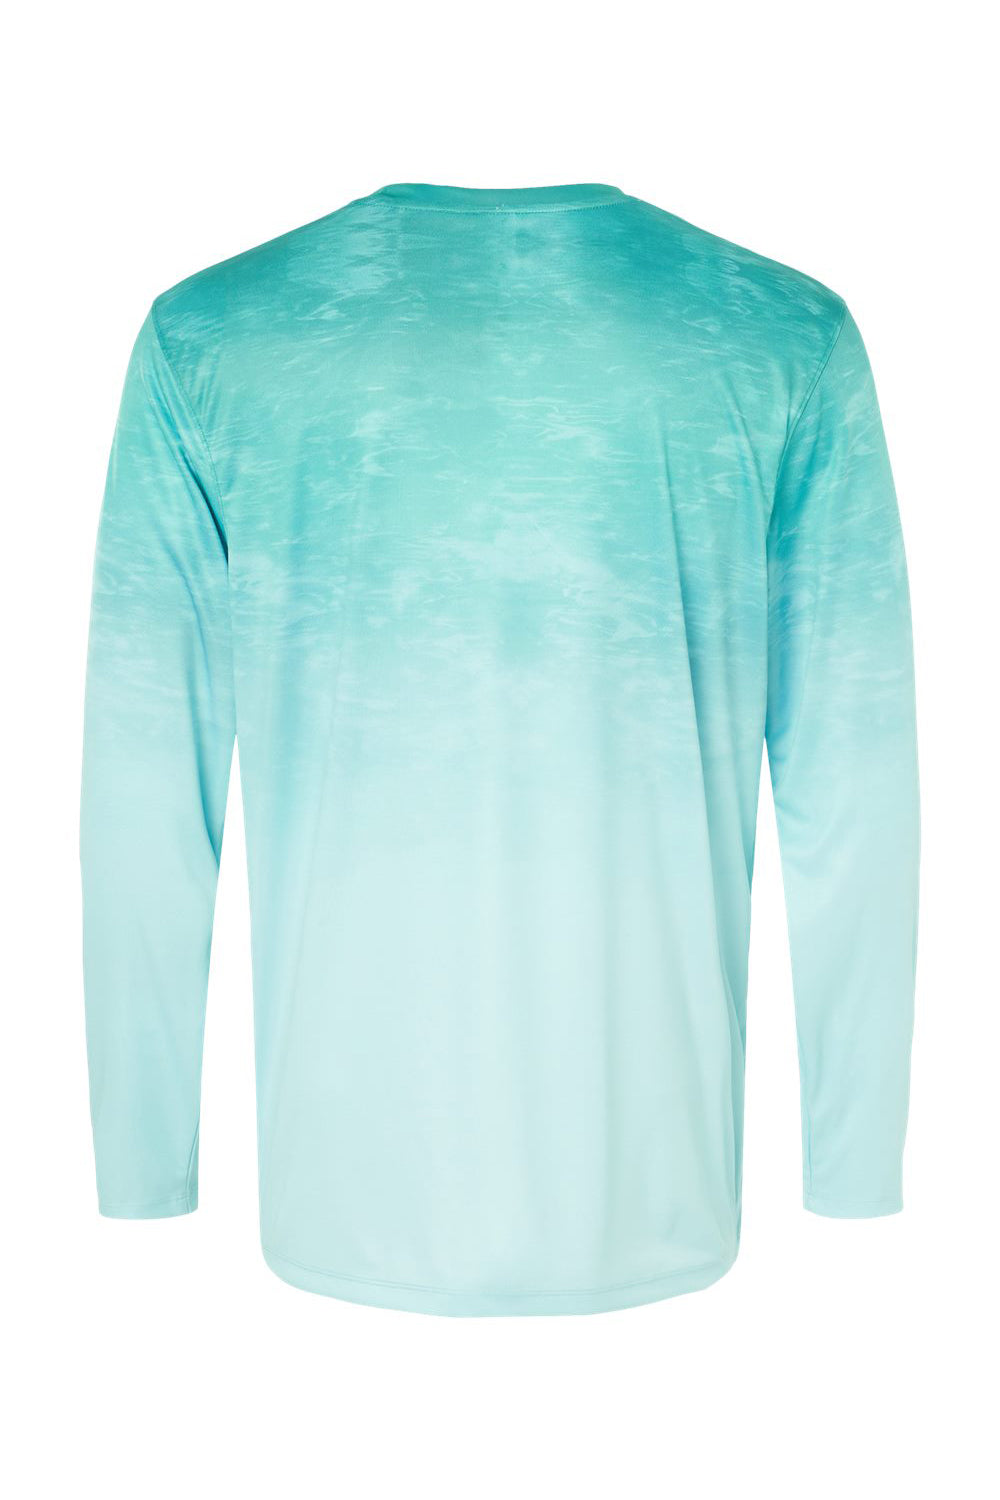 Paragon 229 Mens Montauk Oceanic Fade Performance Long Sleeve Crewneck T-Shirt Aqua Blue Fade Flat Back